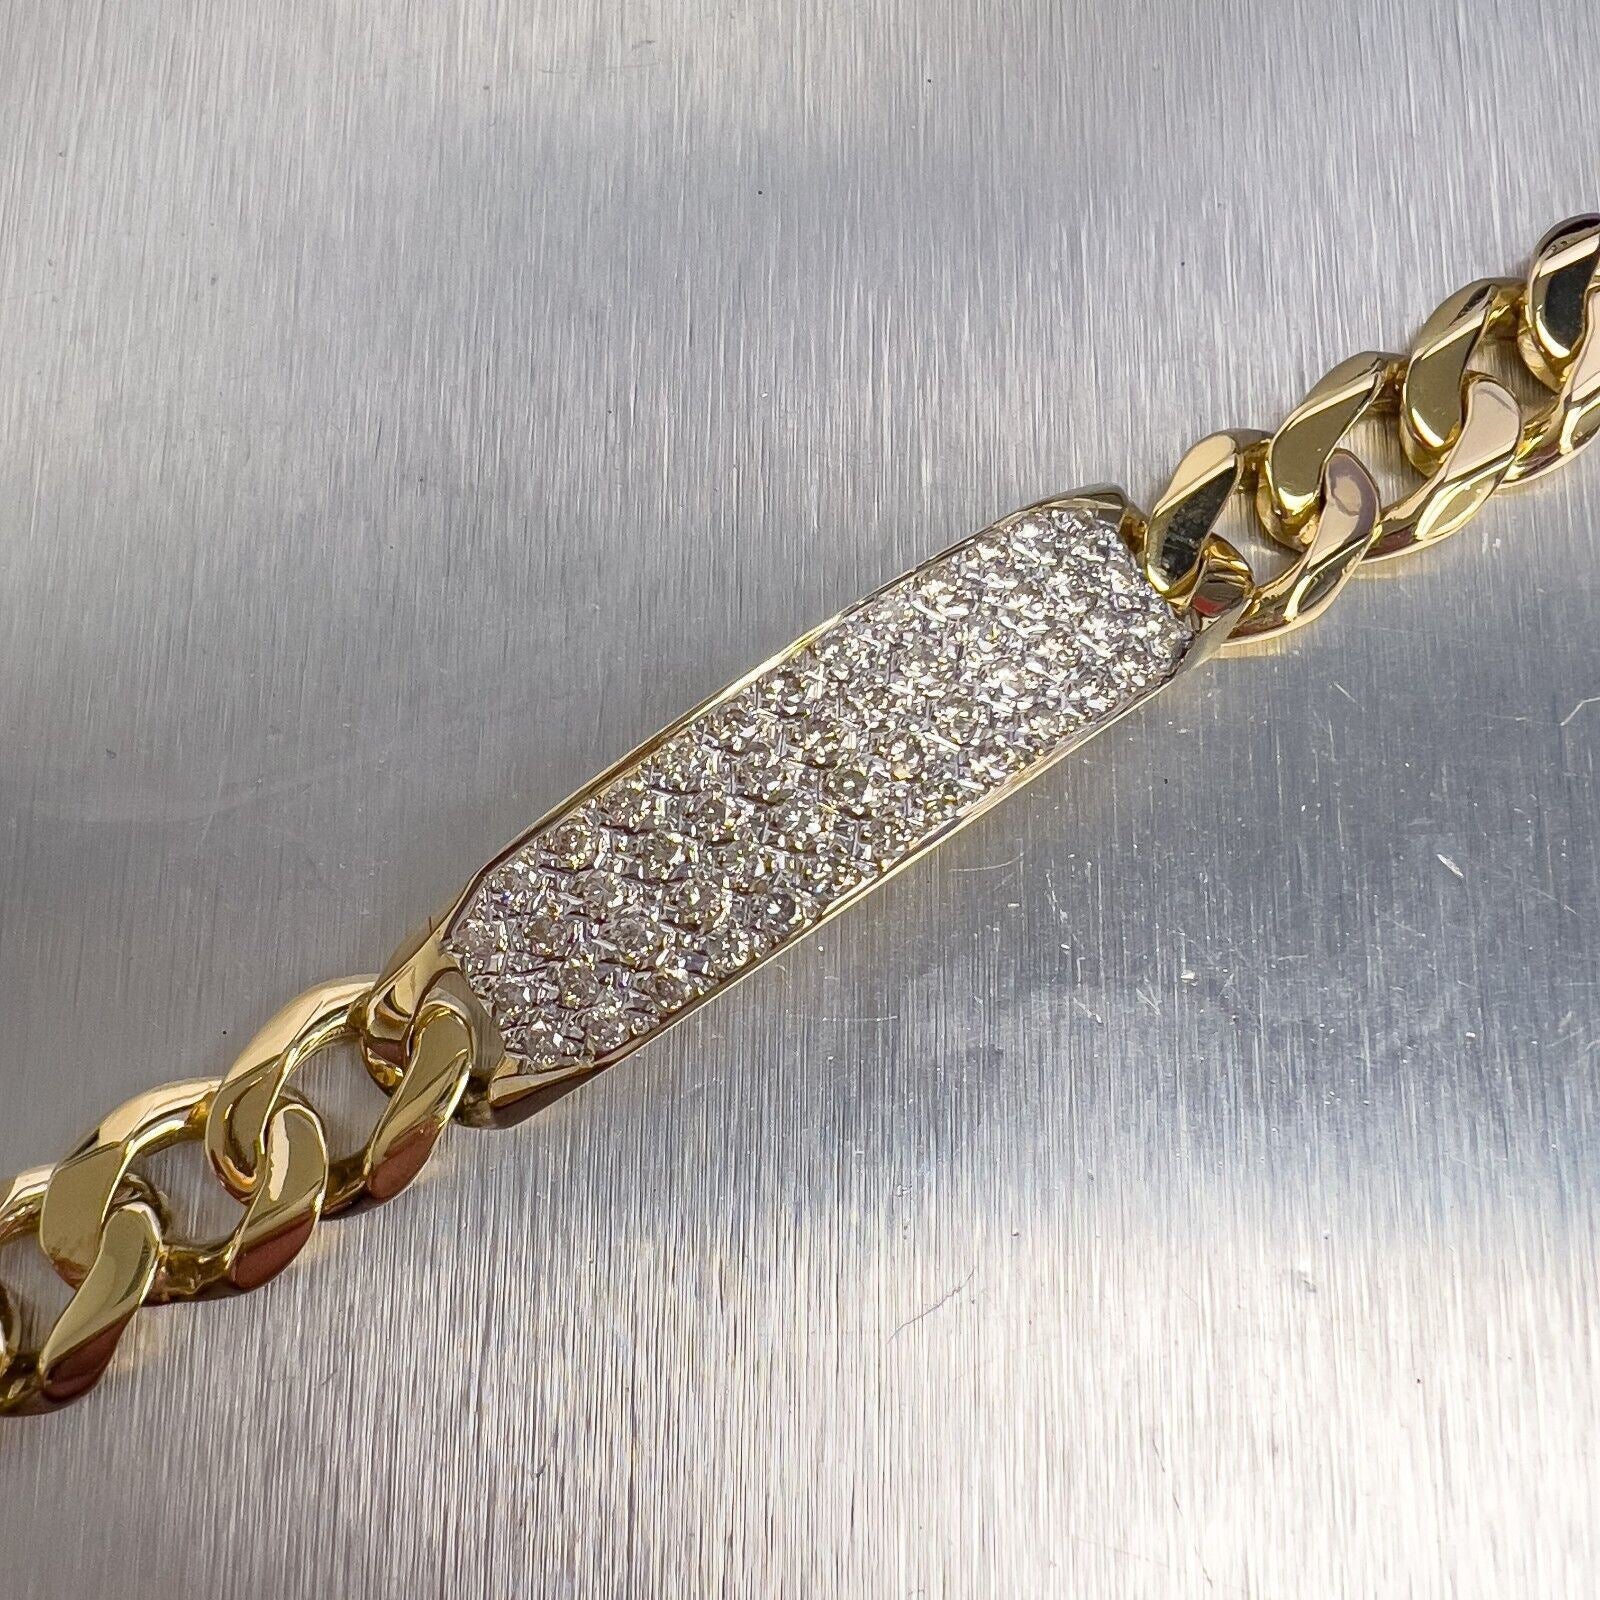 14K Yellow Gold Diamond Cuban Link Bracelet